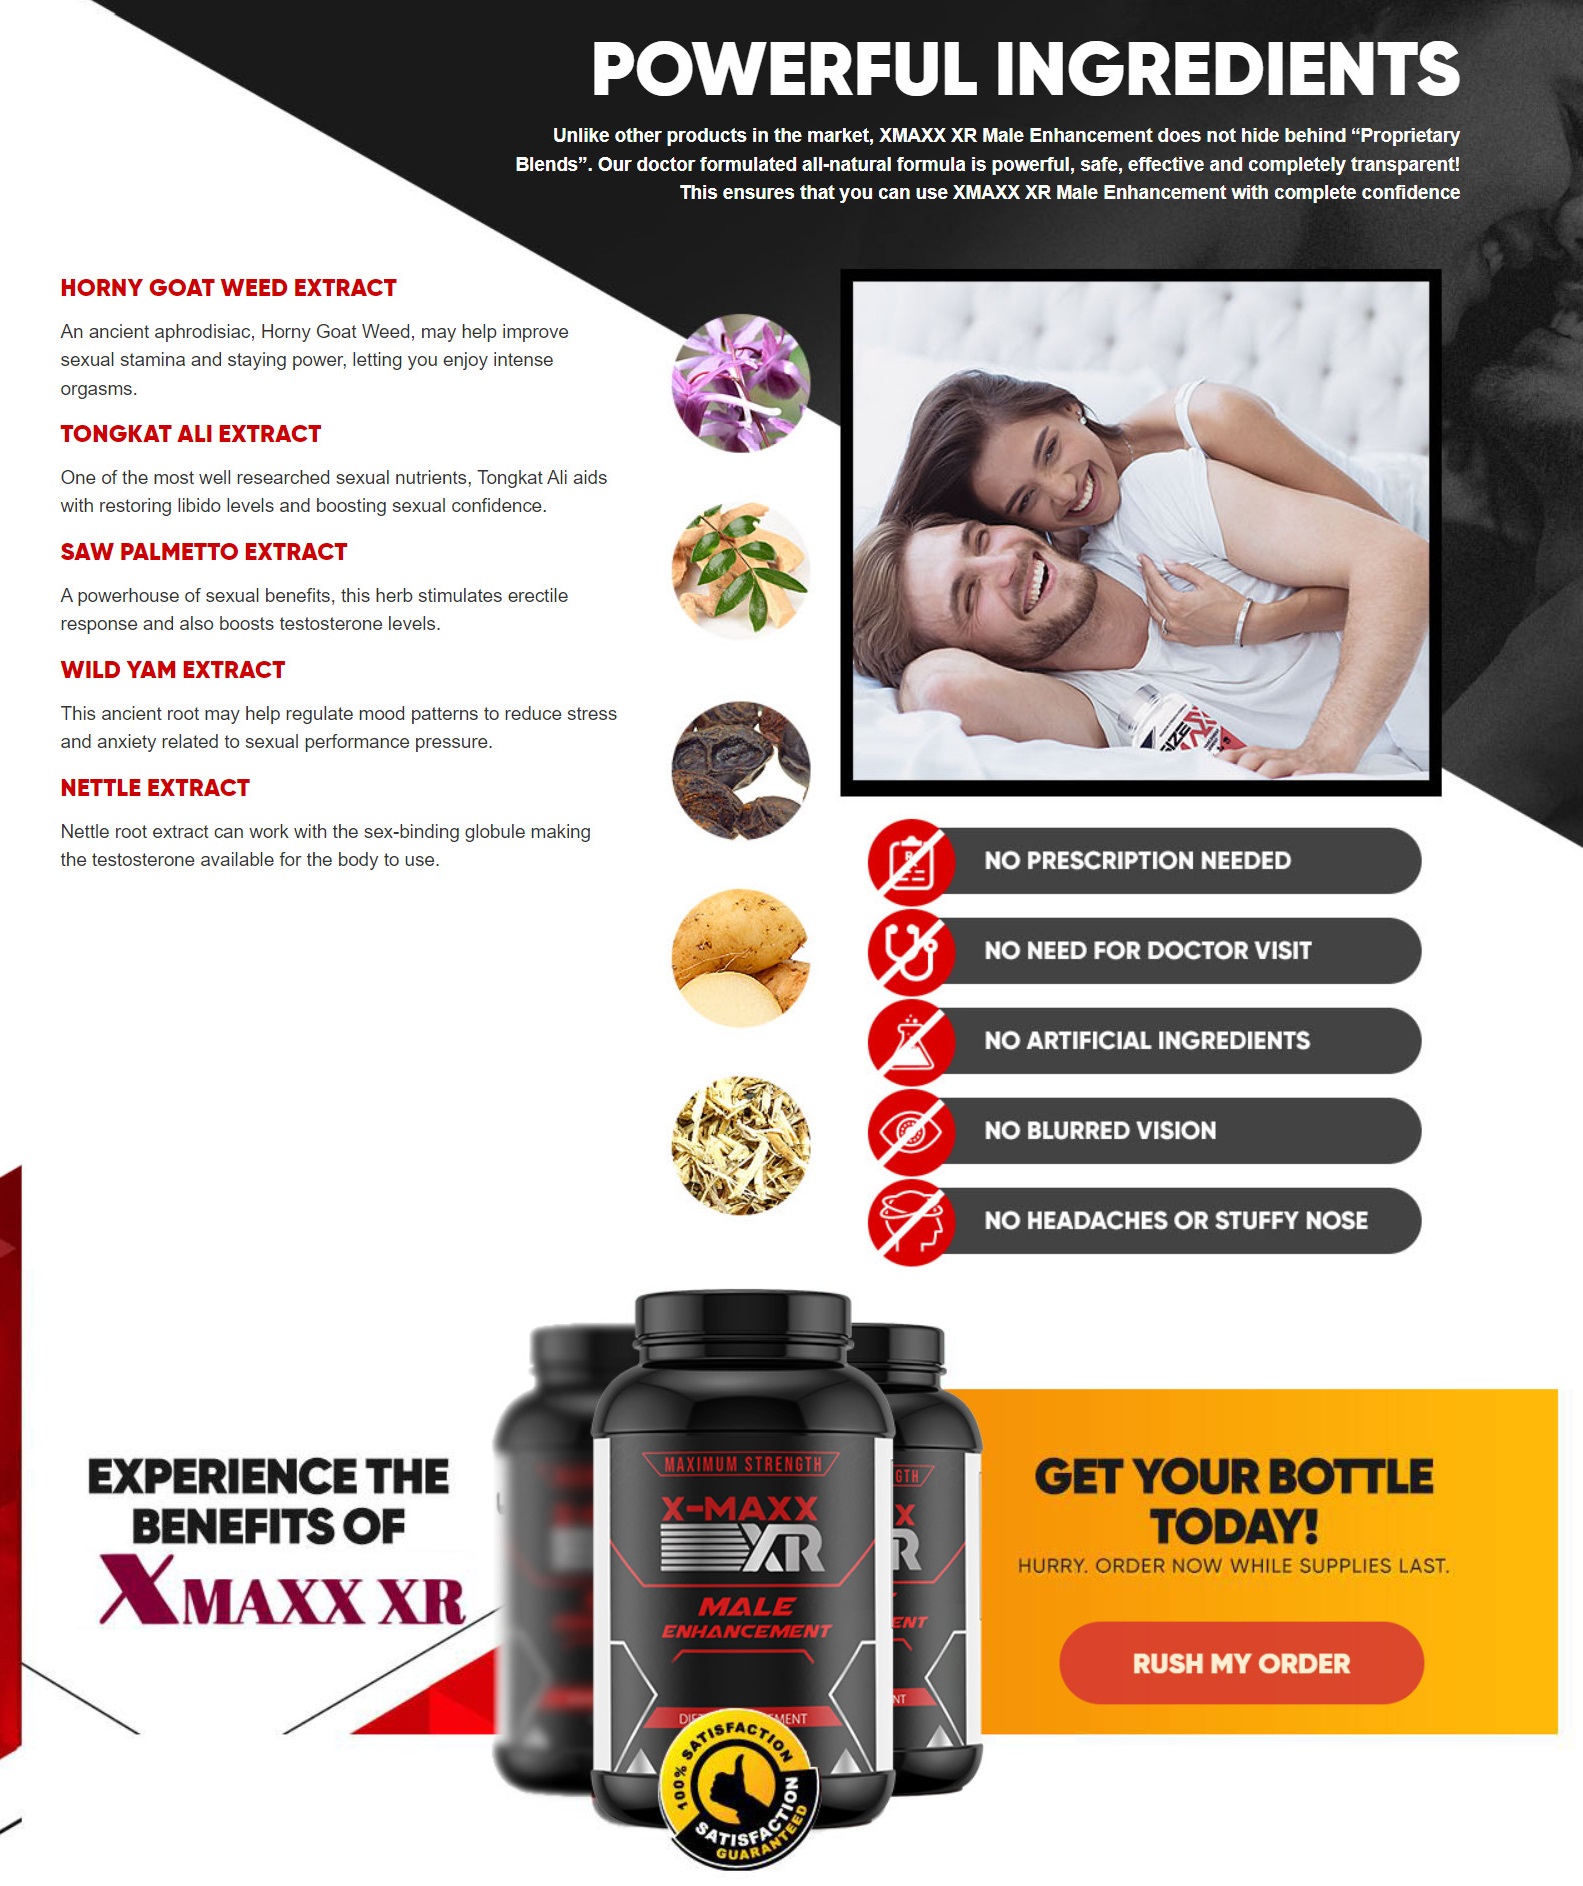 XMaxx XR Male Enhancement Ingredients